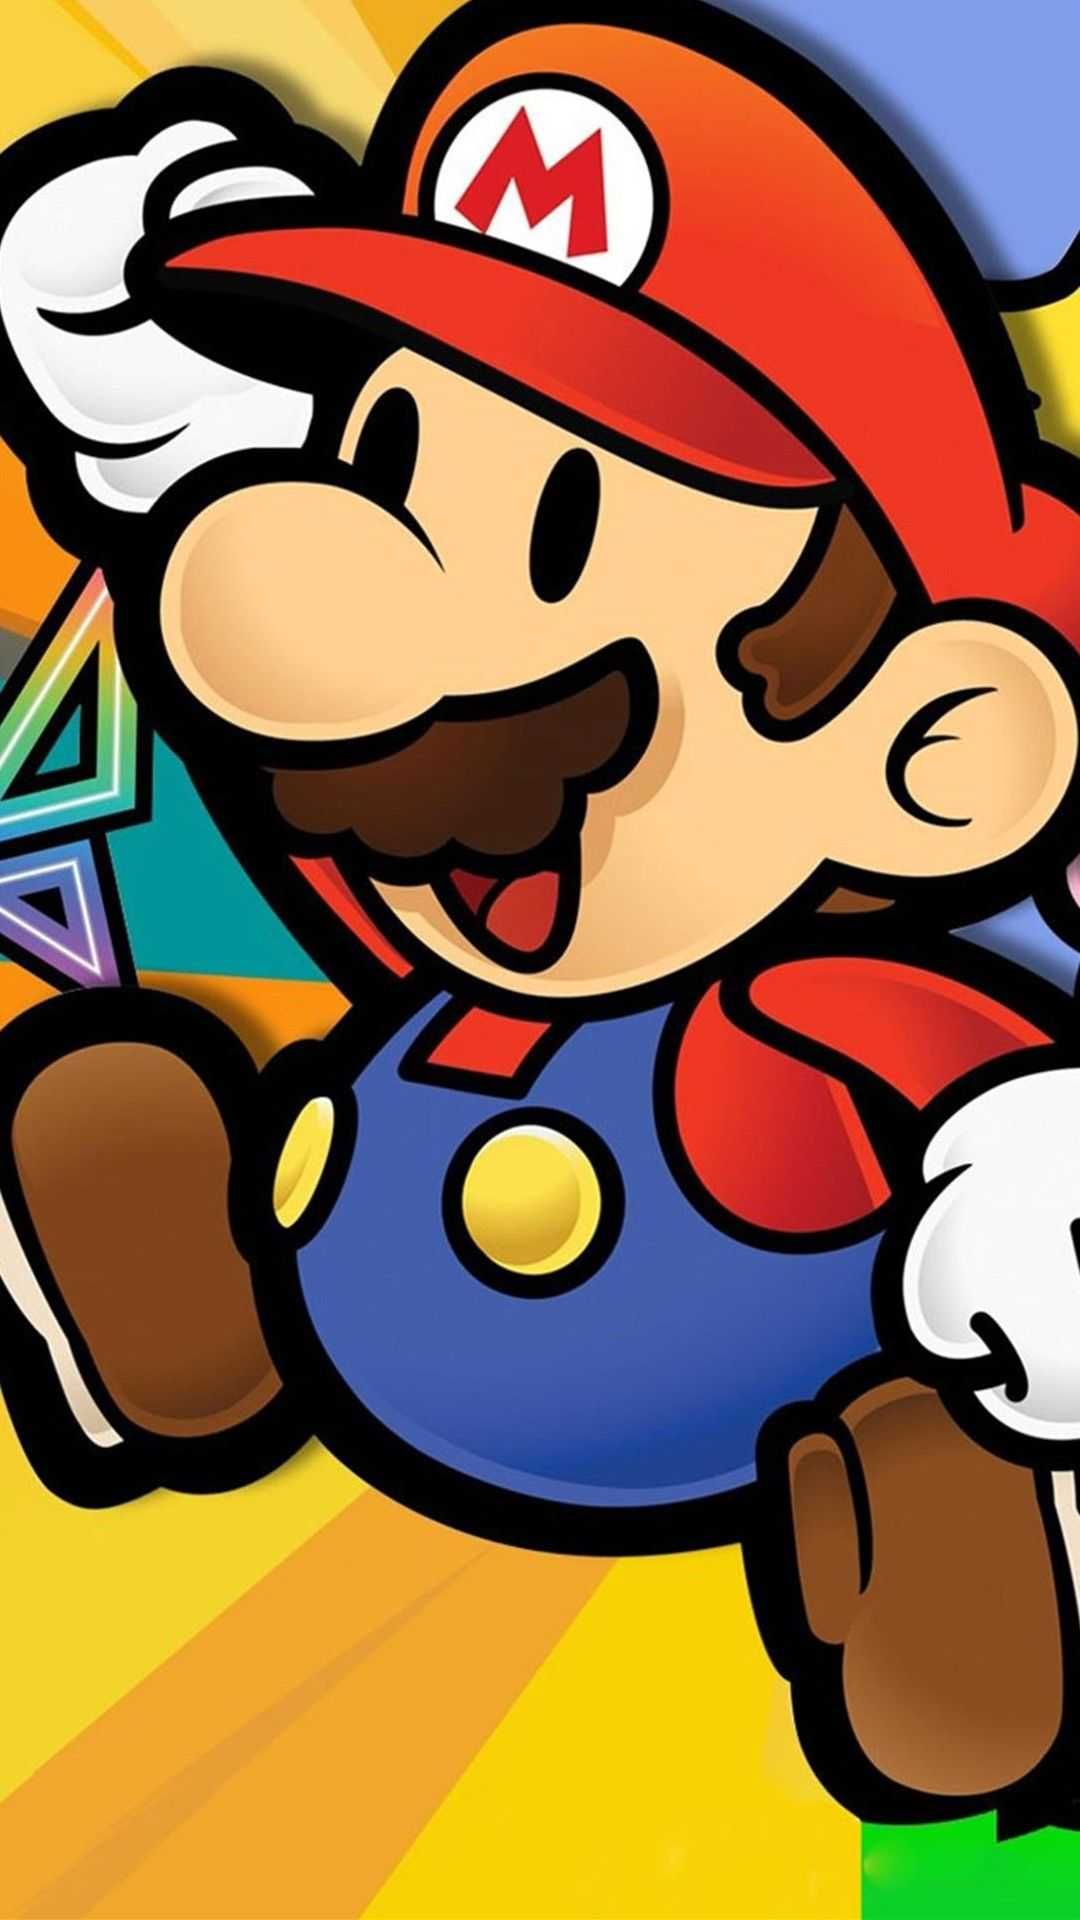 IPhone Super Mario Wallpaper Discover More Games, Mario, Super Mario Wallpaper. 82132 Iphone Super. Super Mario, Mario, Super Mario Bros